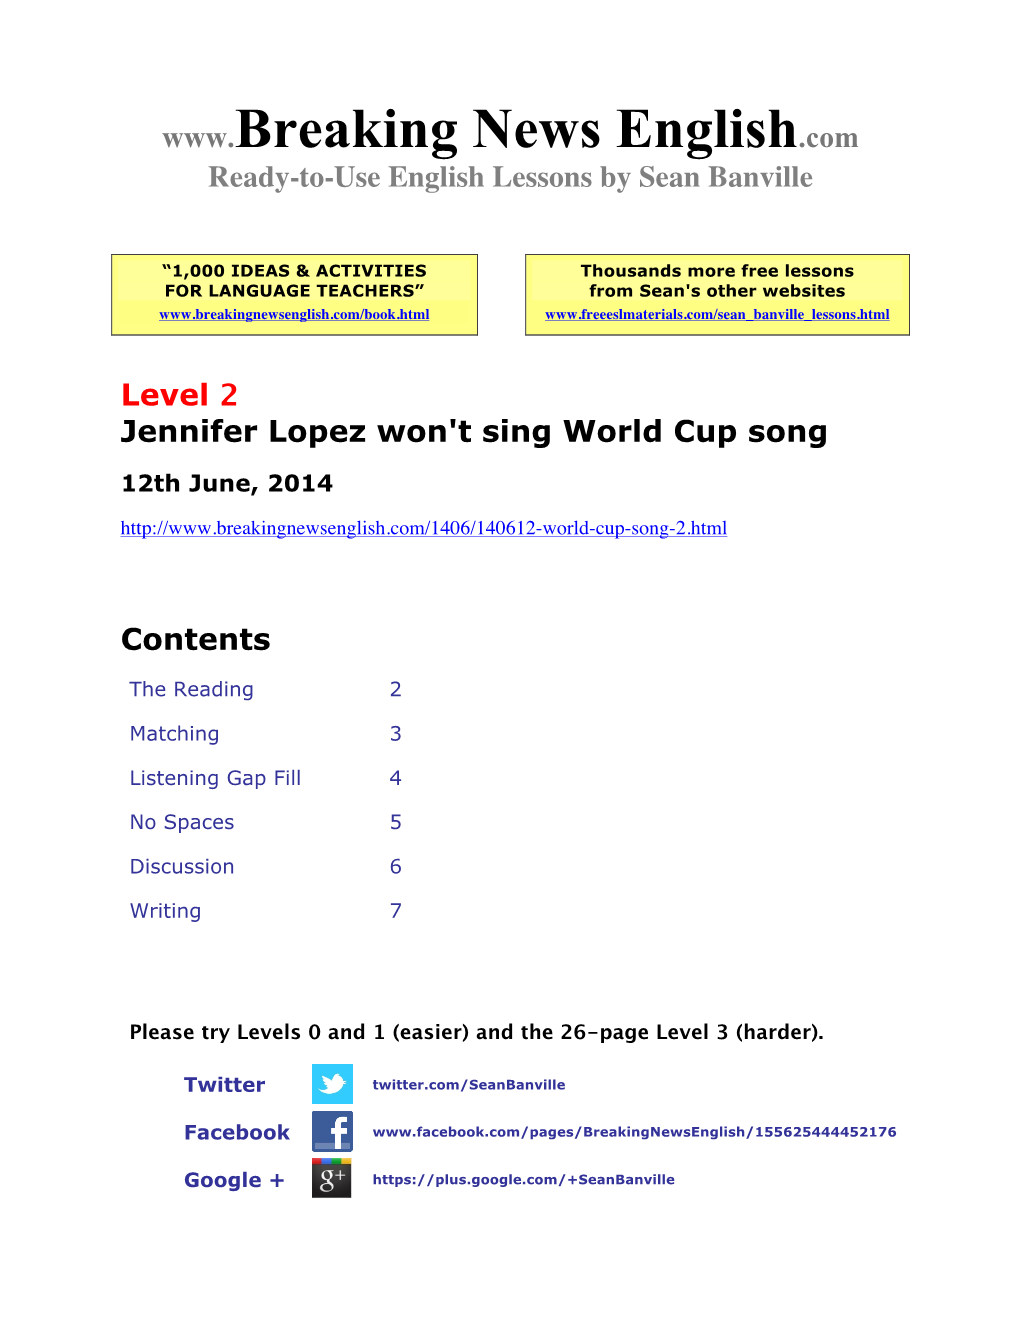 Level 2 Jennifer Lopez Won't Sing World Cup Song